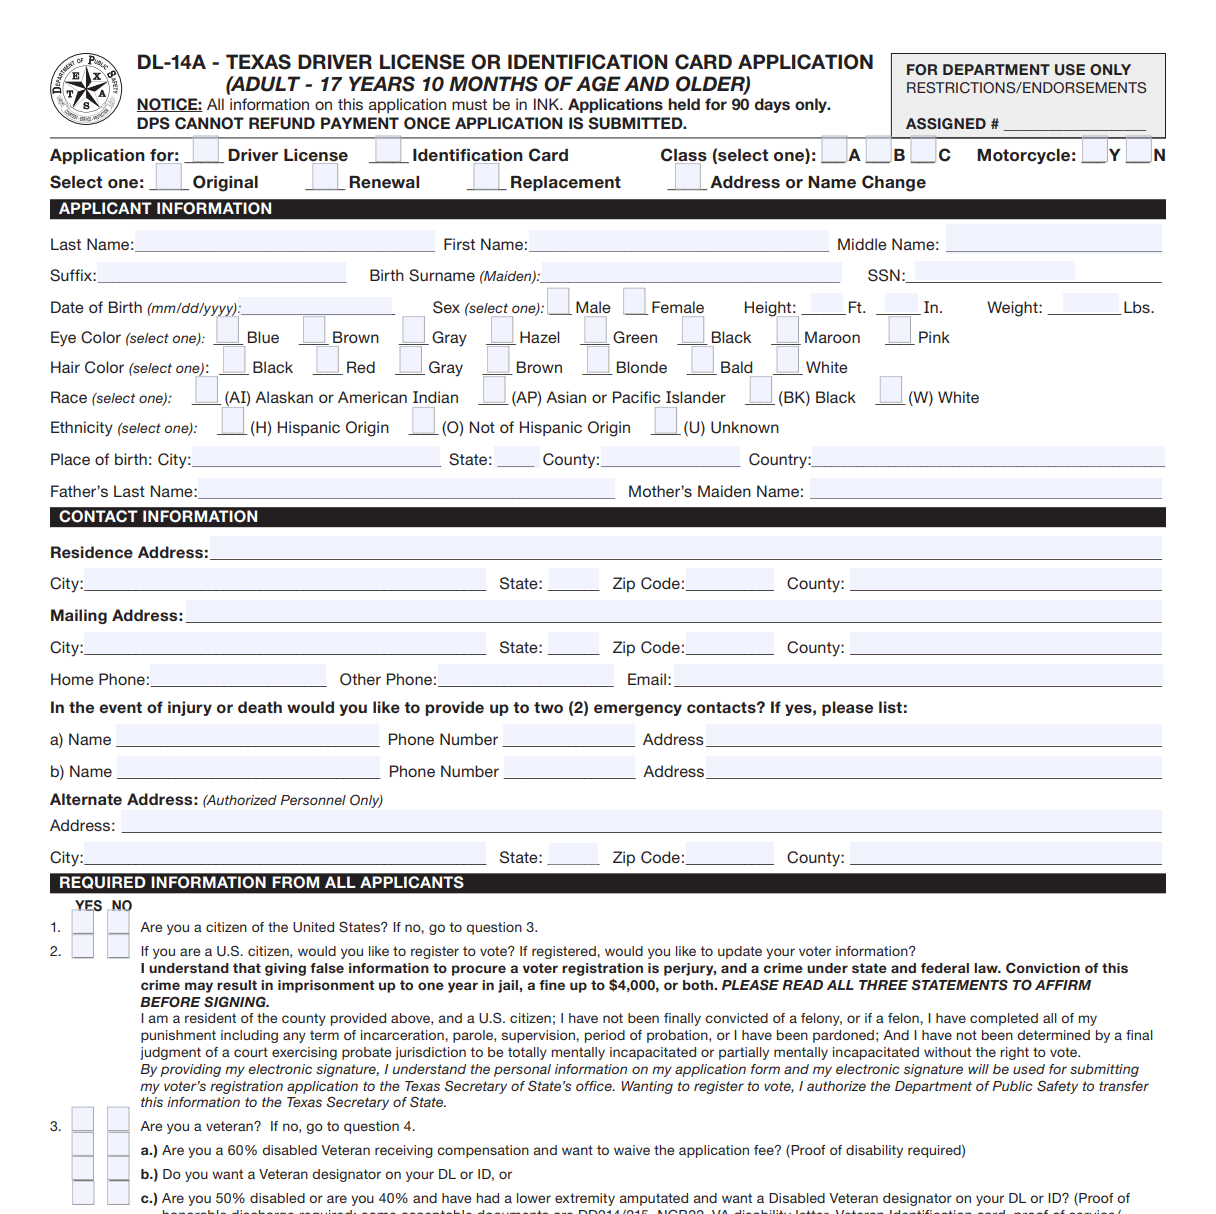 dmv driver's license application form